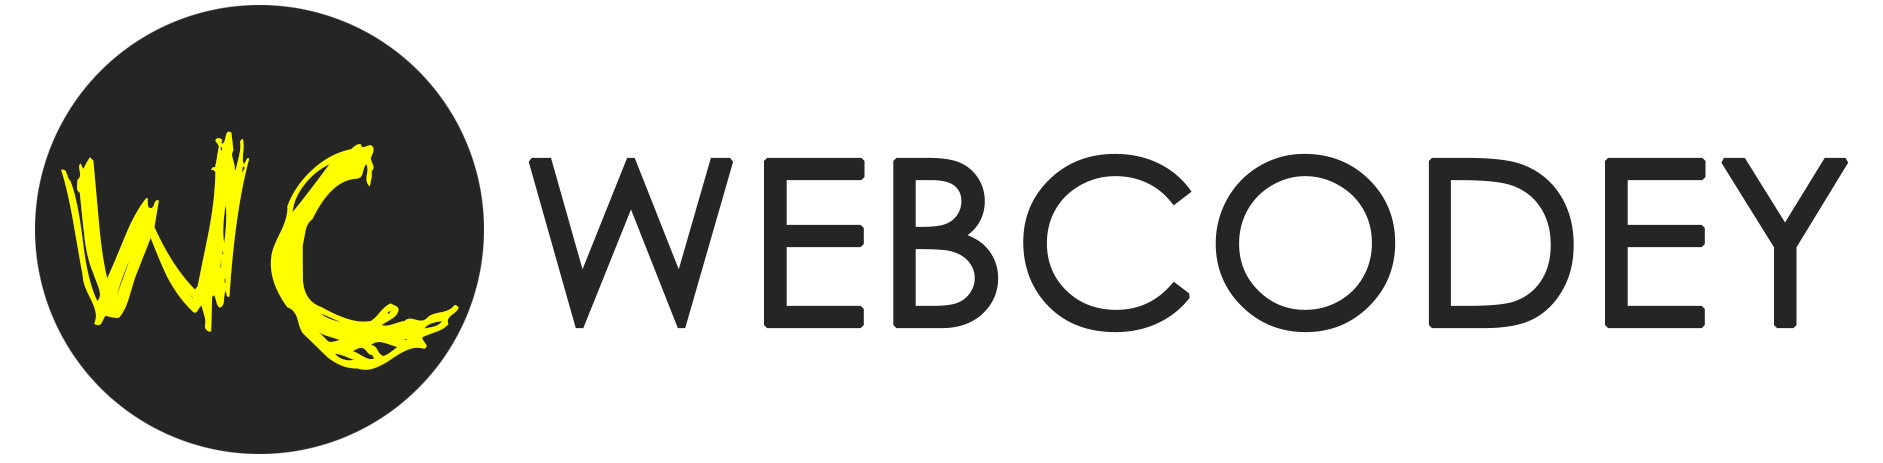 Webcodey